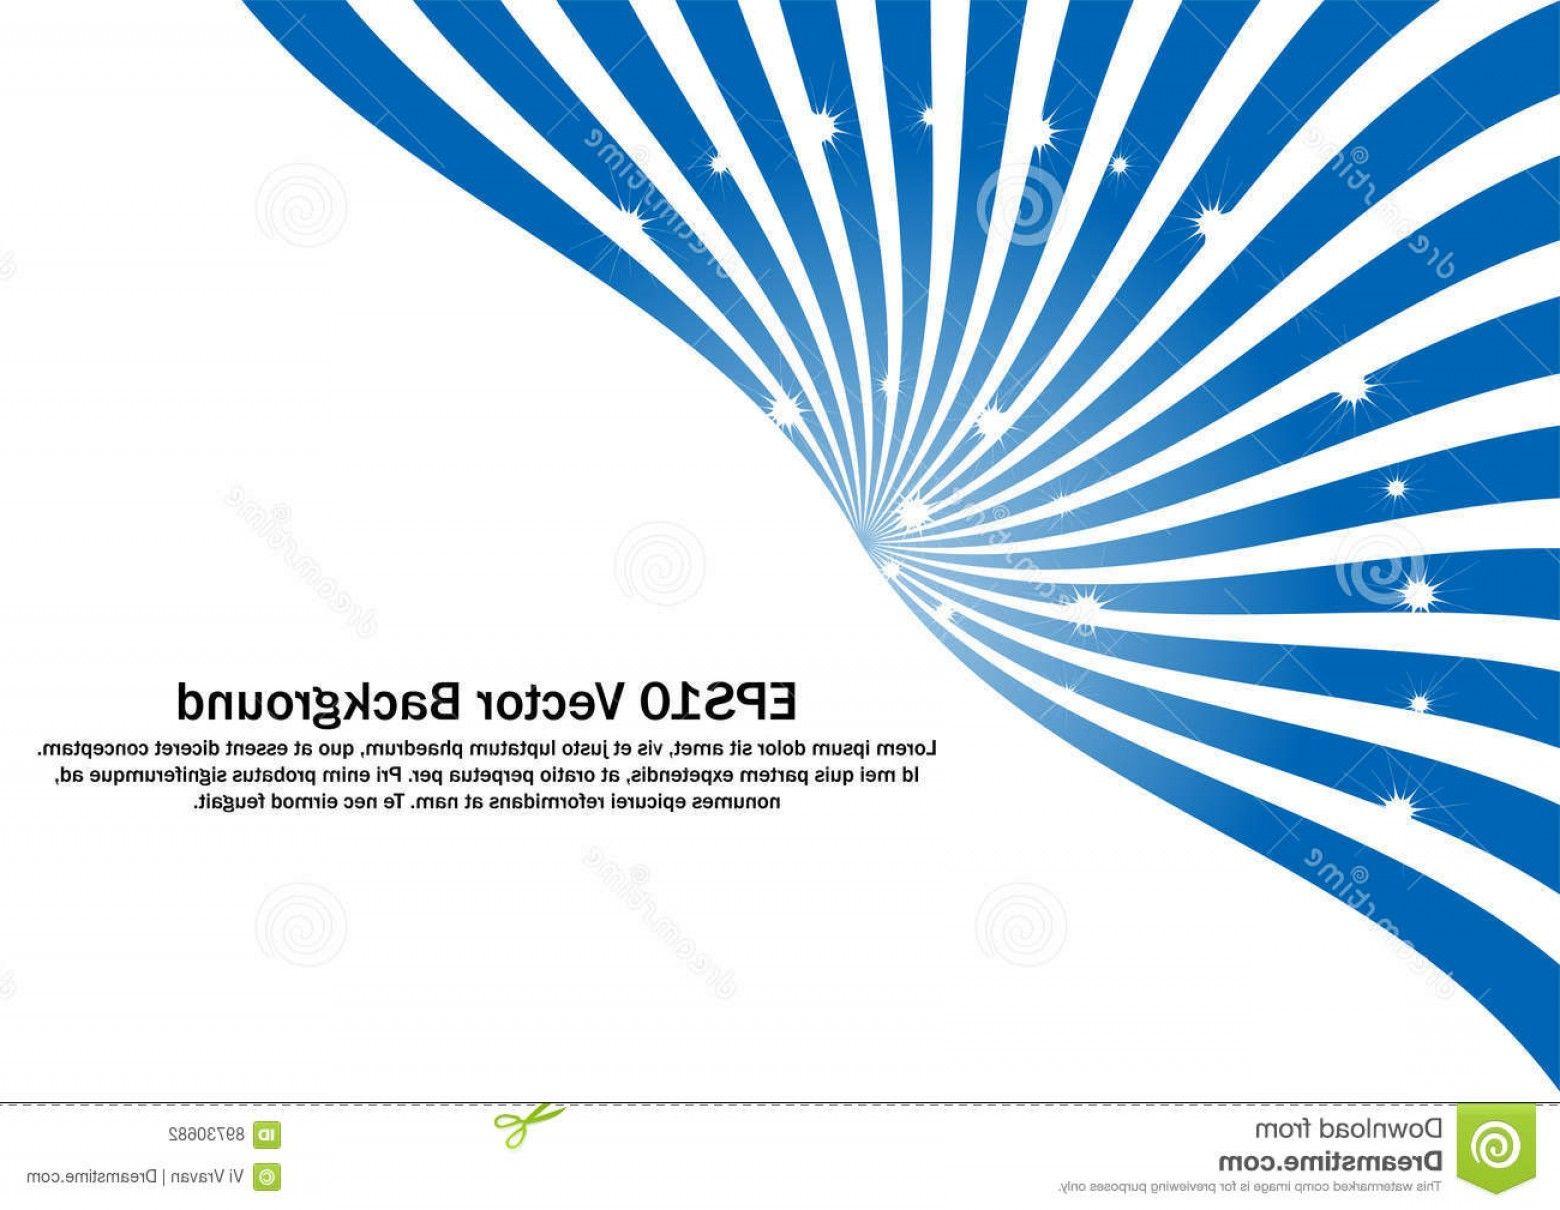 Blue and White Swirl Logo - Stock Illustration Abstract Blue White Clip Art Banner Backdrop